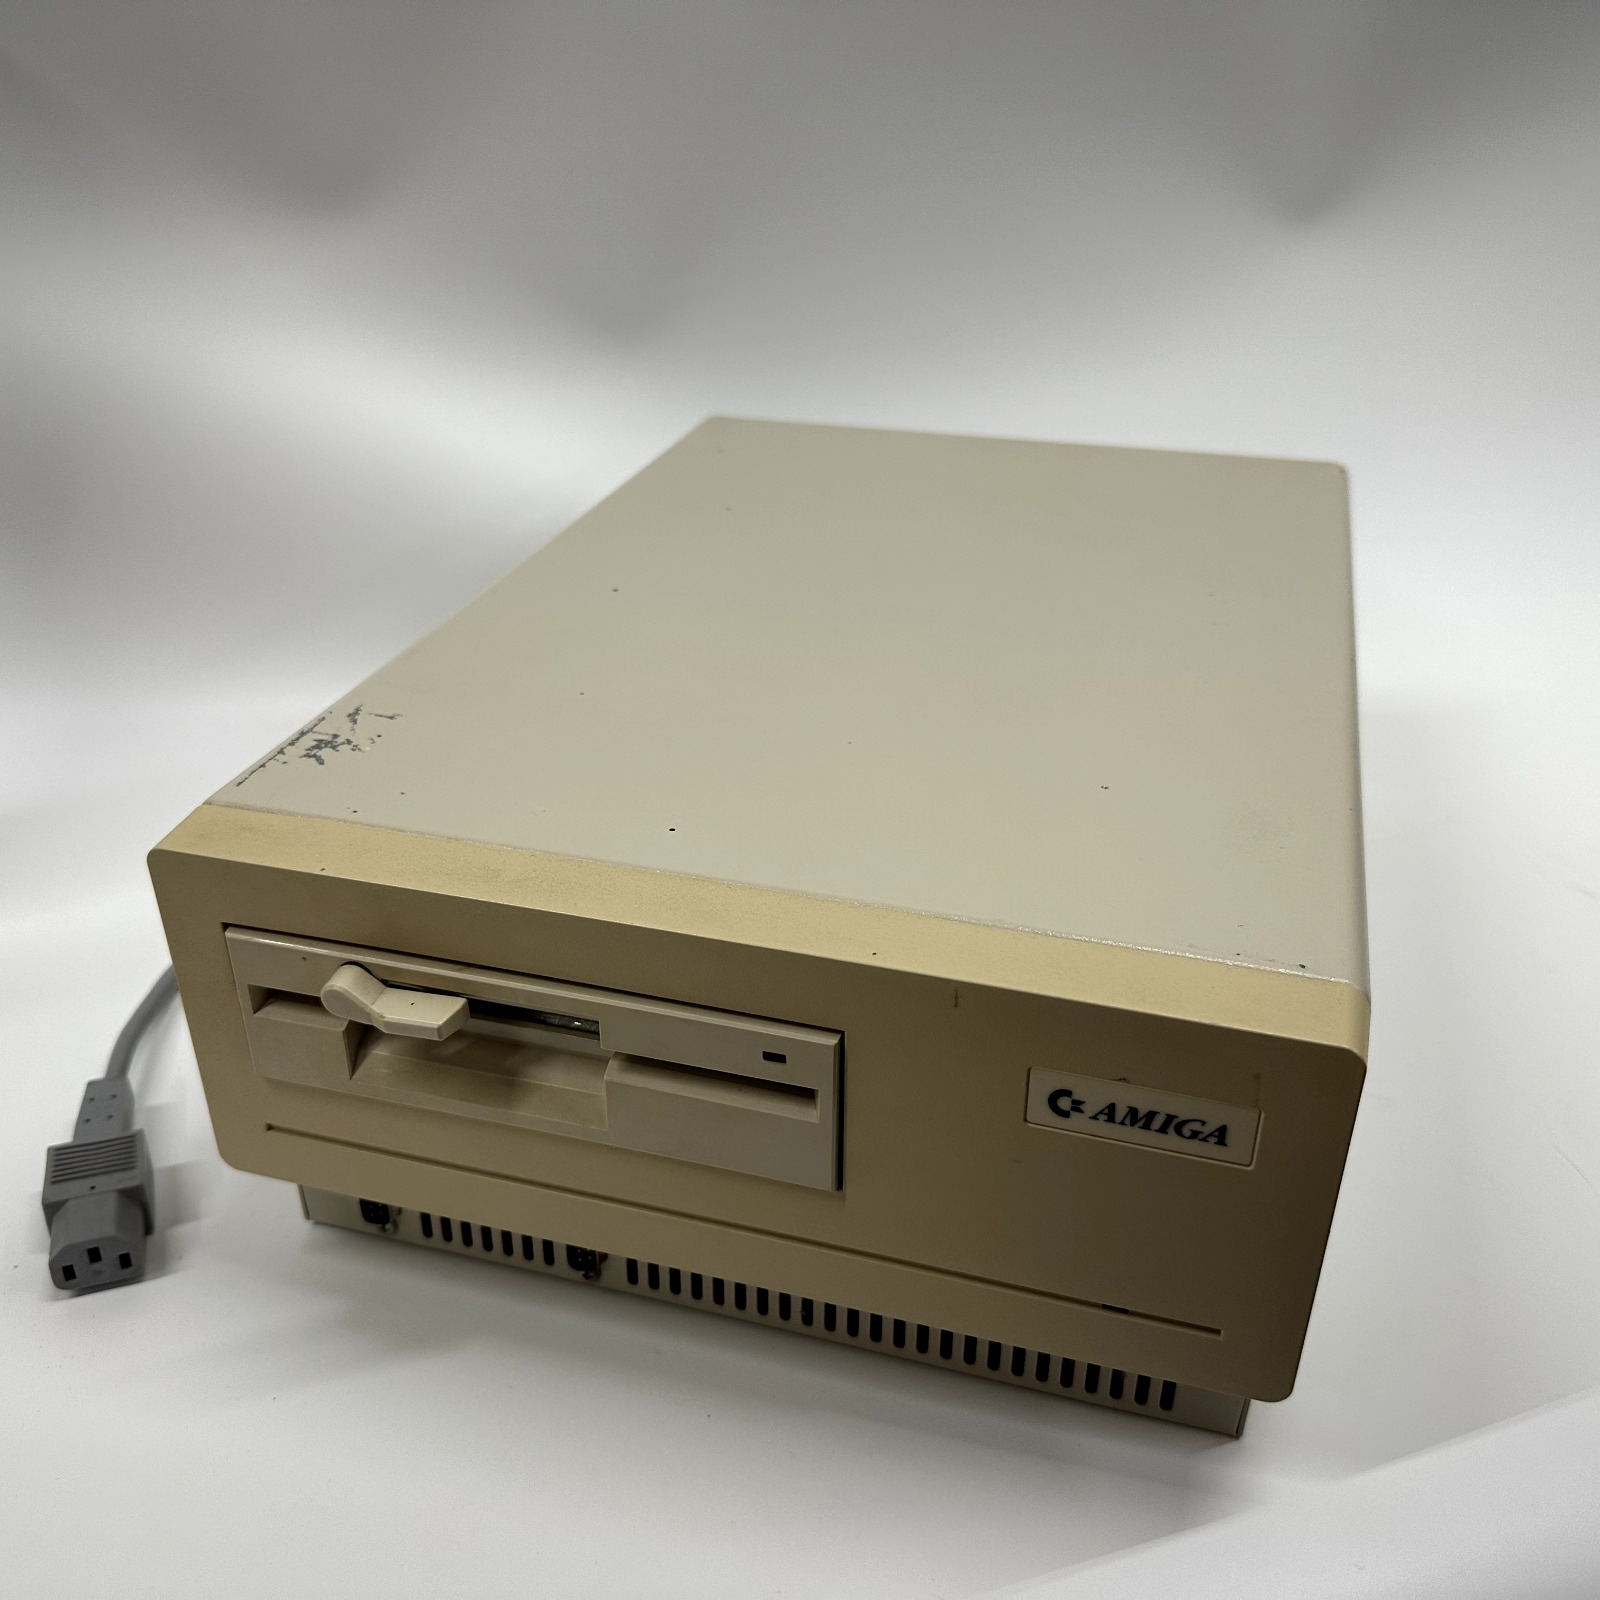 Commodore Amiga 1060 Side Car Expansion 